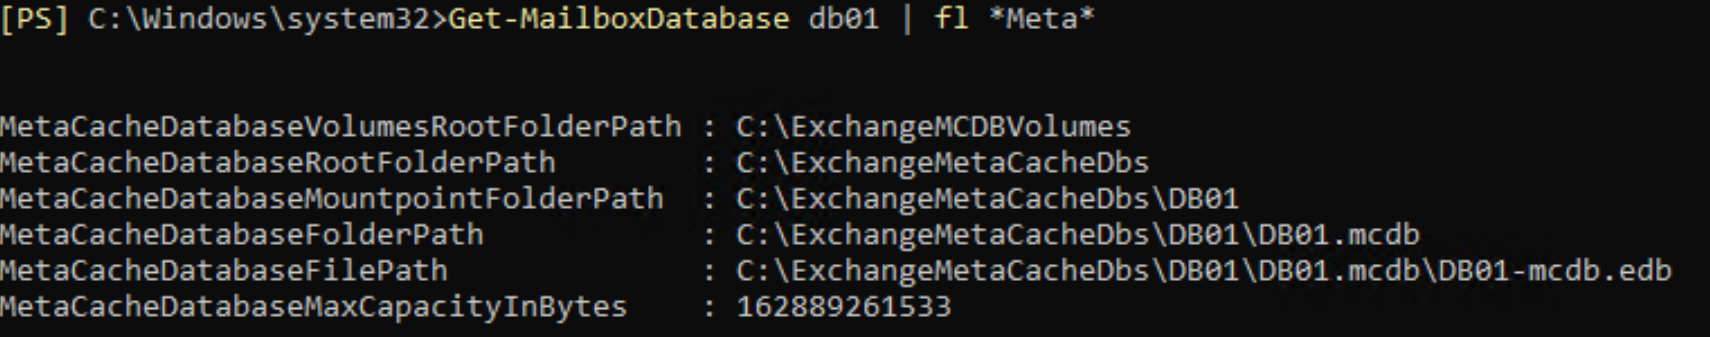 MCDB paths - Get_mailboxDatabase.png